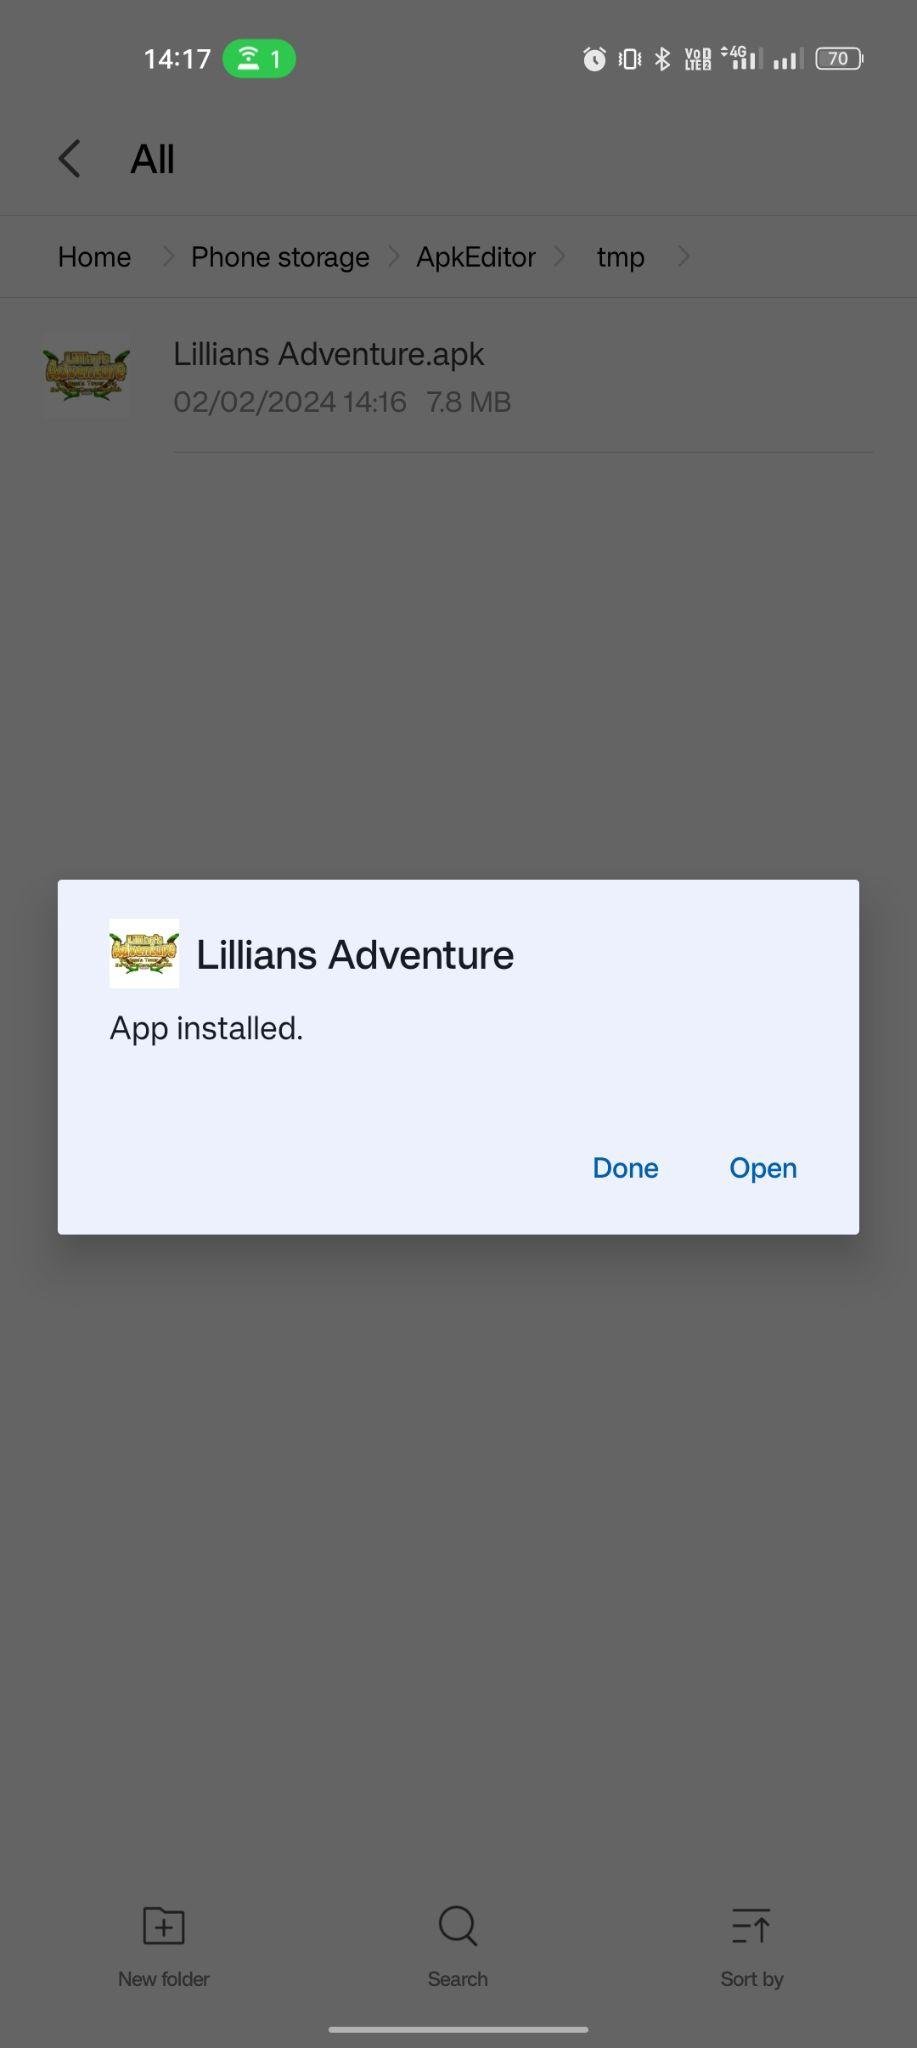 Lillian’s Adventure apk installed